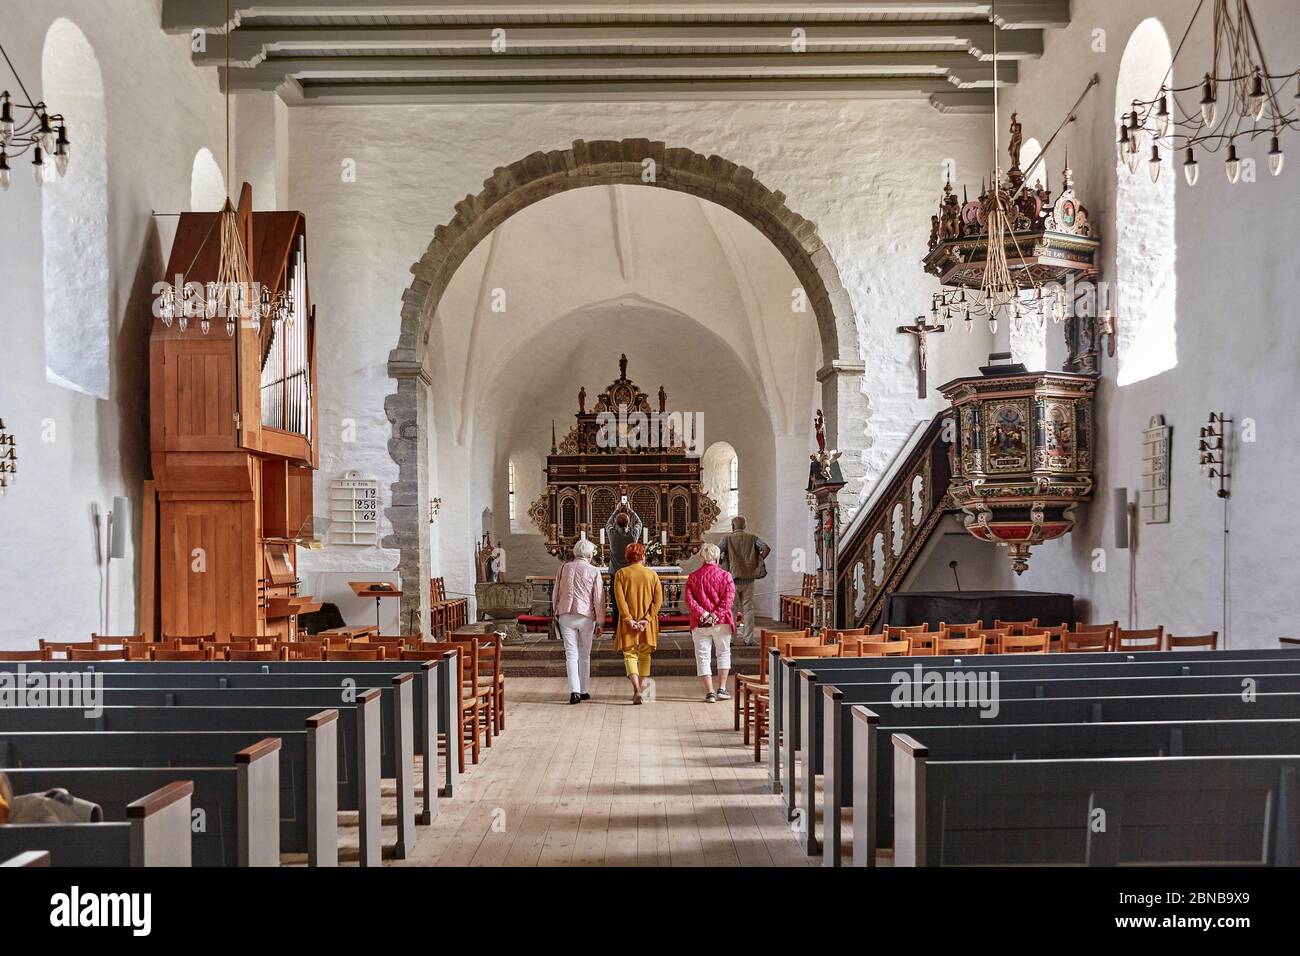 - Jun 27, 2019: Aakirkeby, Bornholm island, Denmark 27 June 2019. Tourists visiting Aa Church (Aa Kirke) - a Romanesque church da Stock Photo Alamy